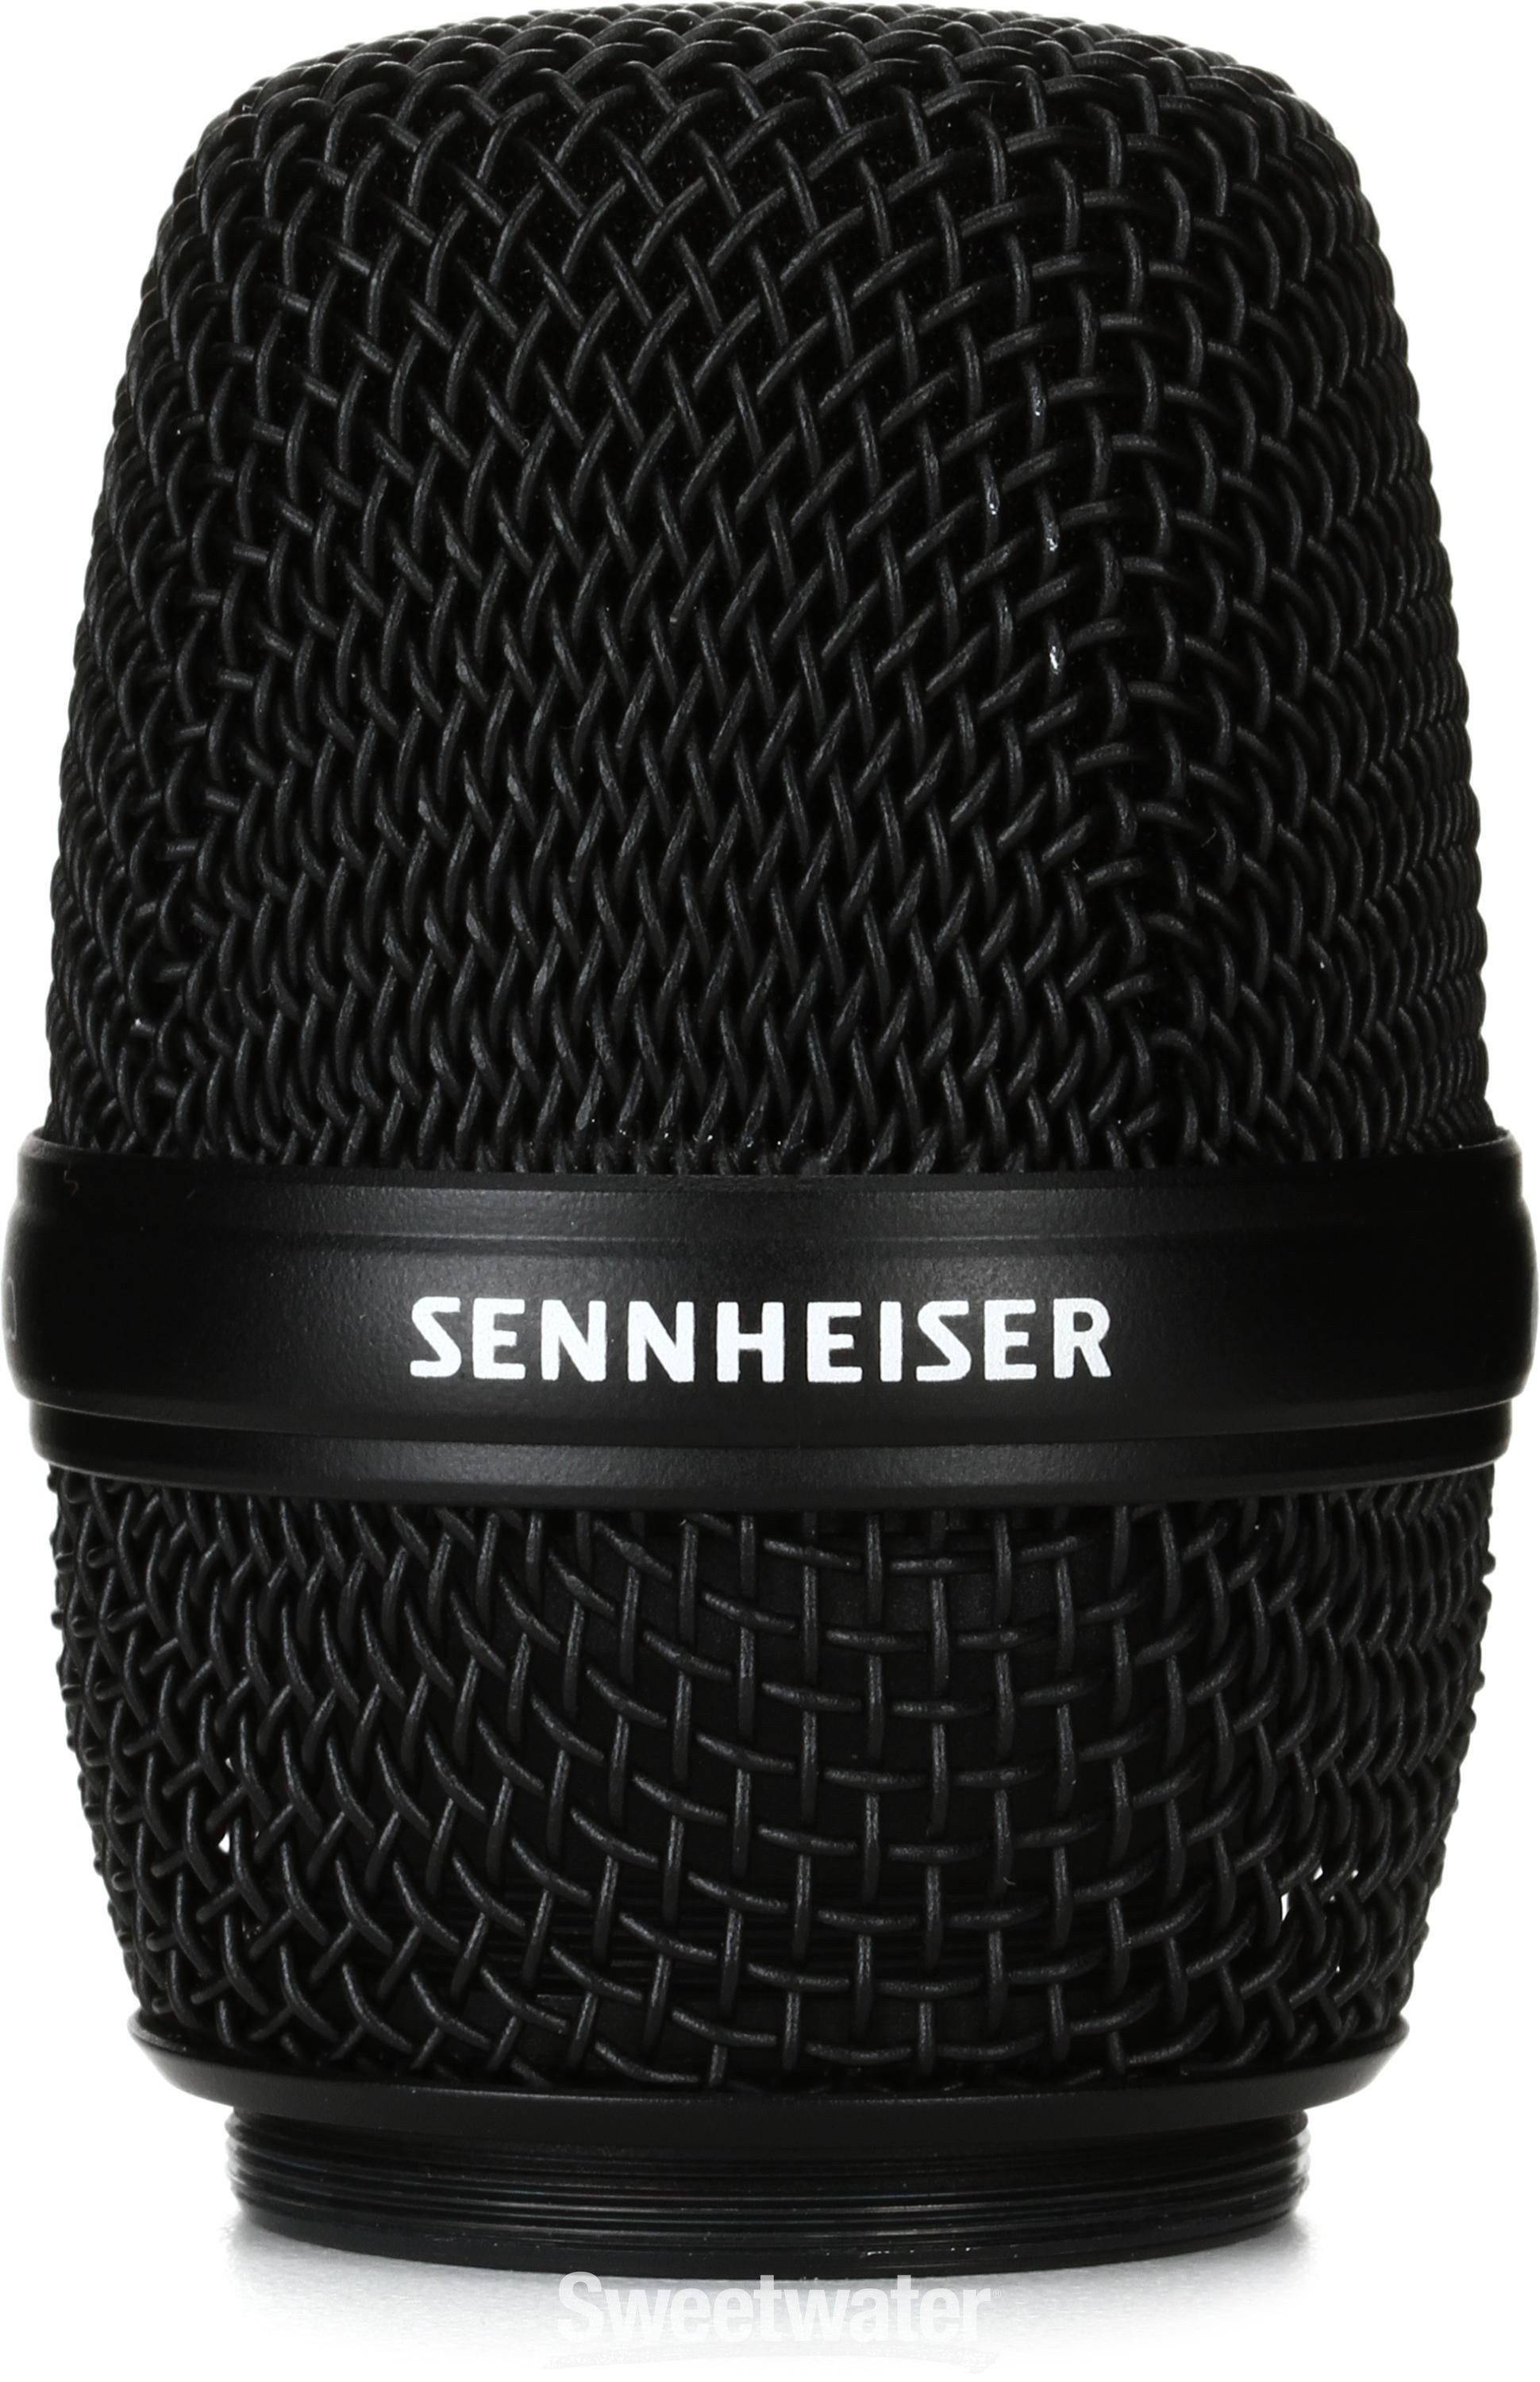 Sennheiser MMD 835-1 BK Cardioid Dynamic Microphone Capsule for